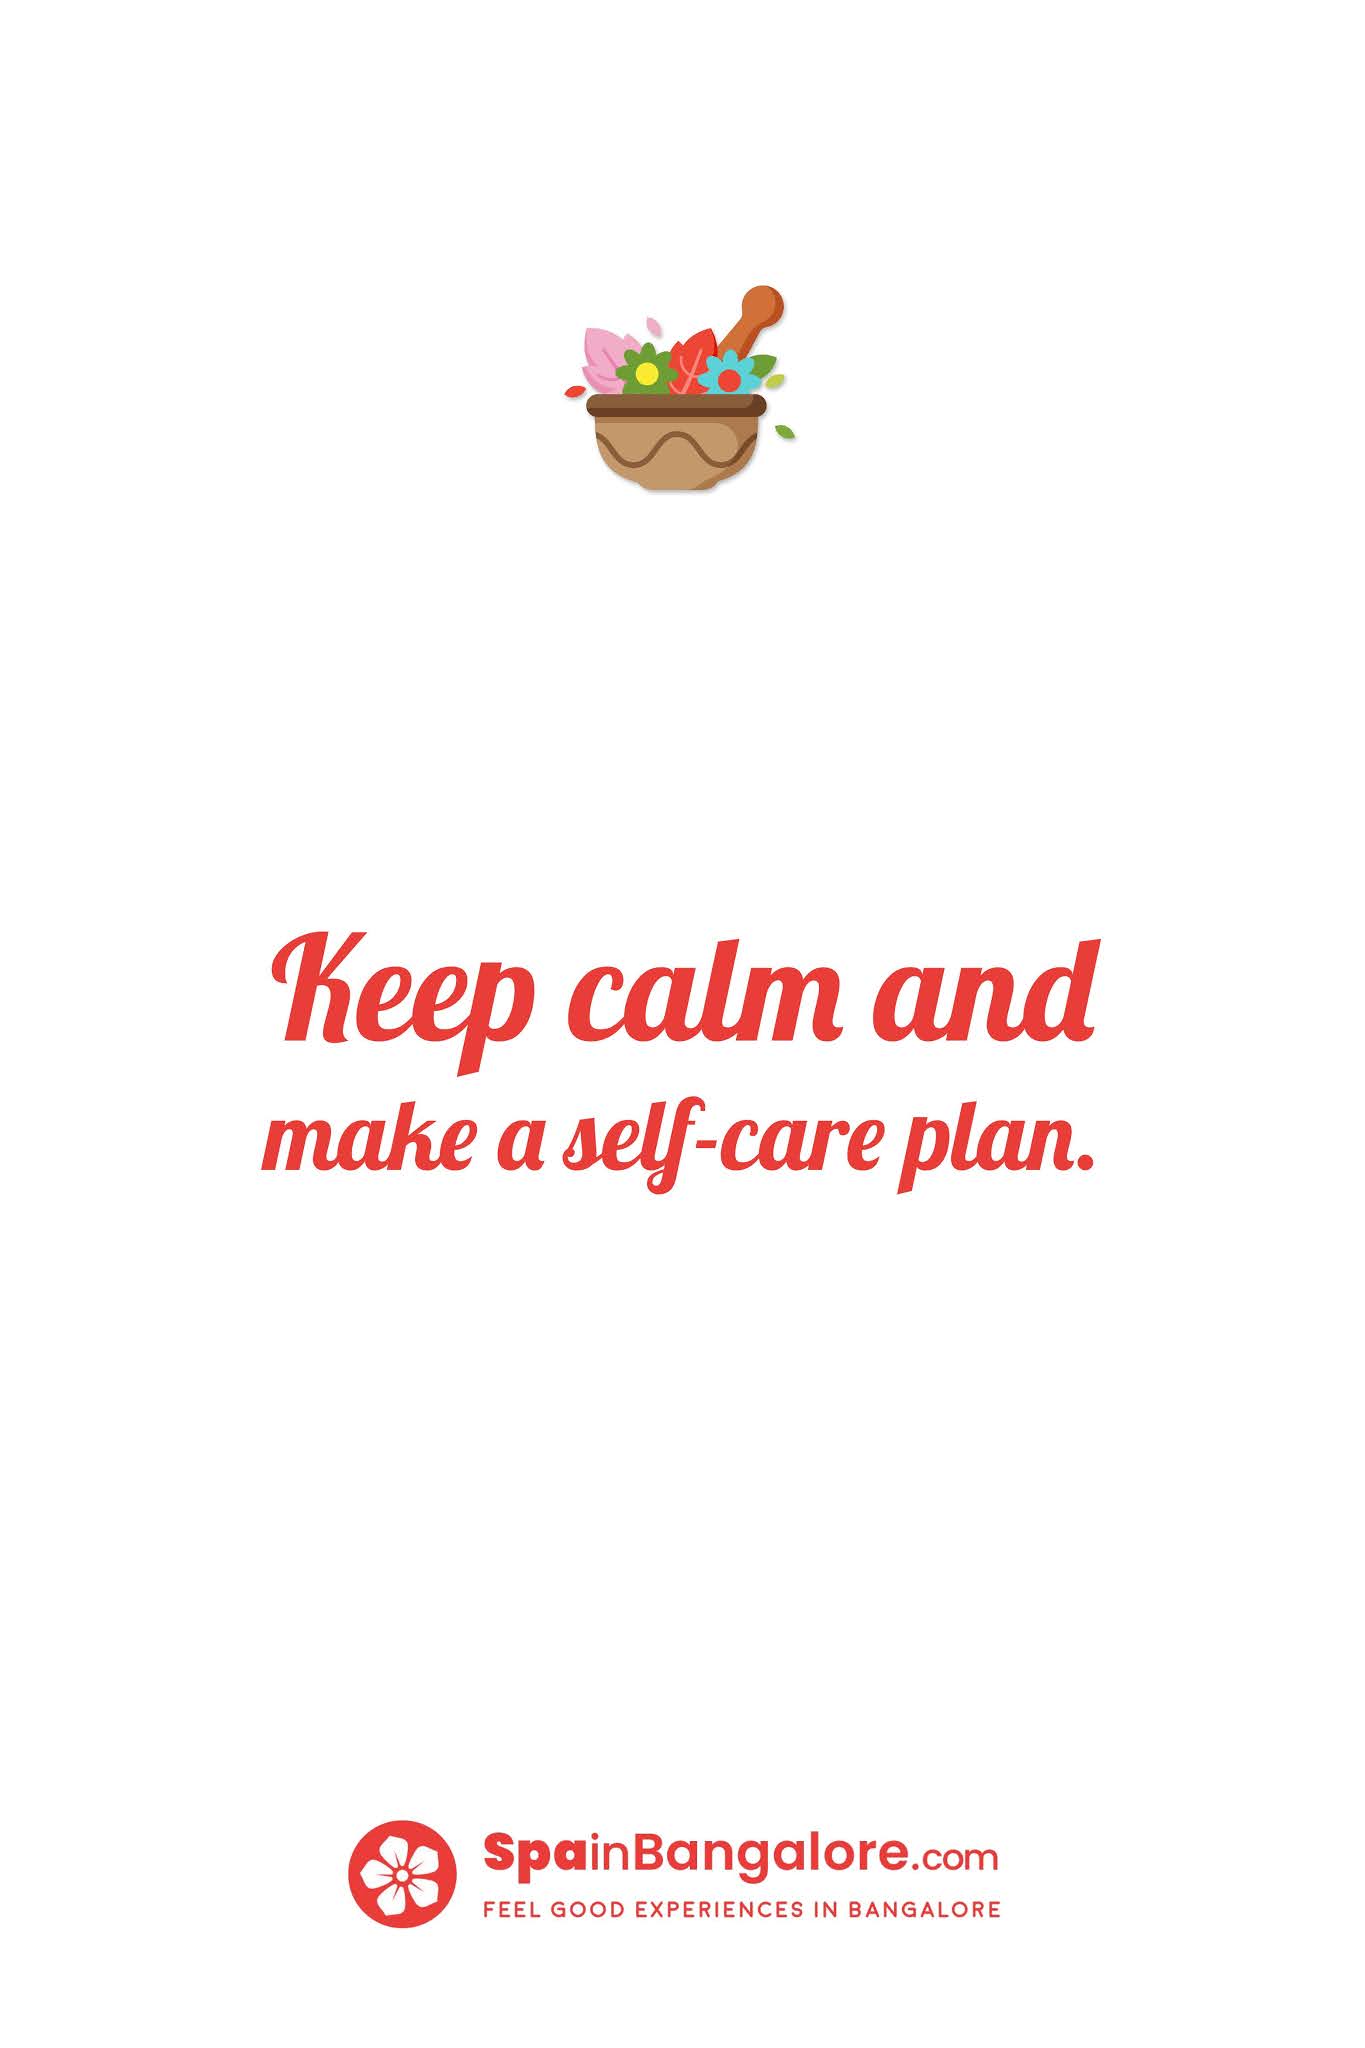 Keep calm and make a self-care plan.